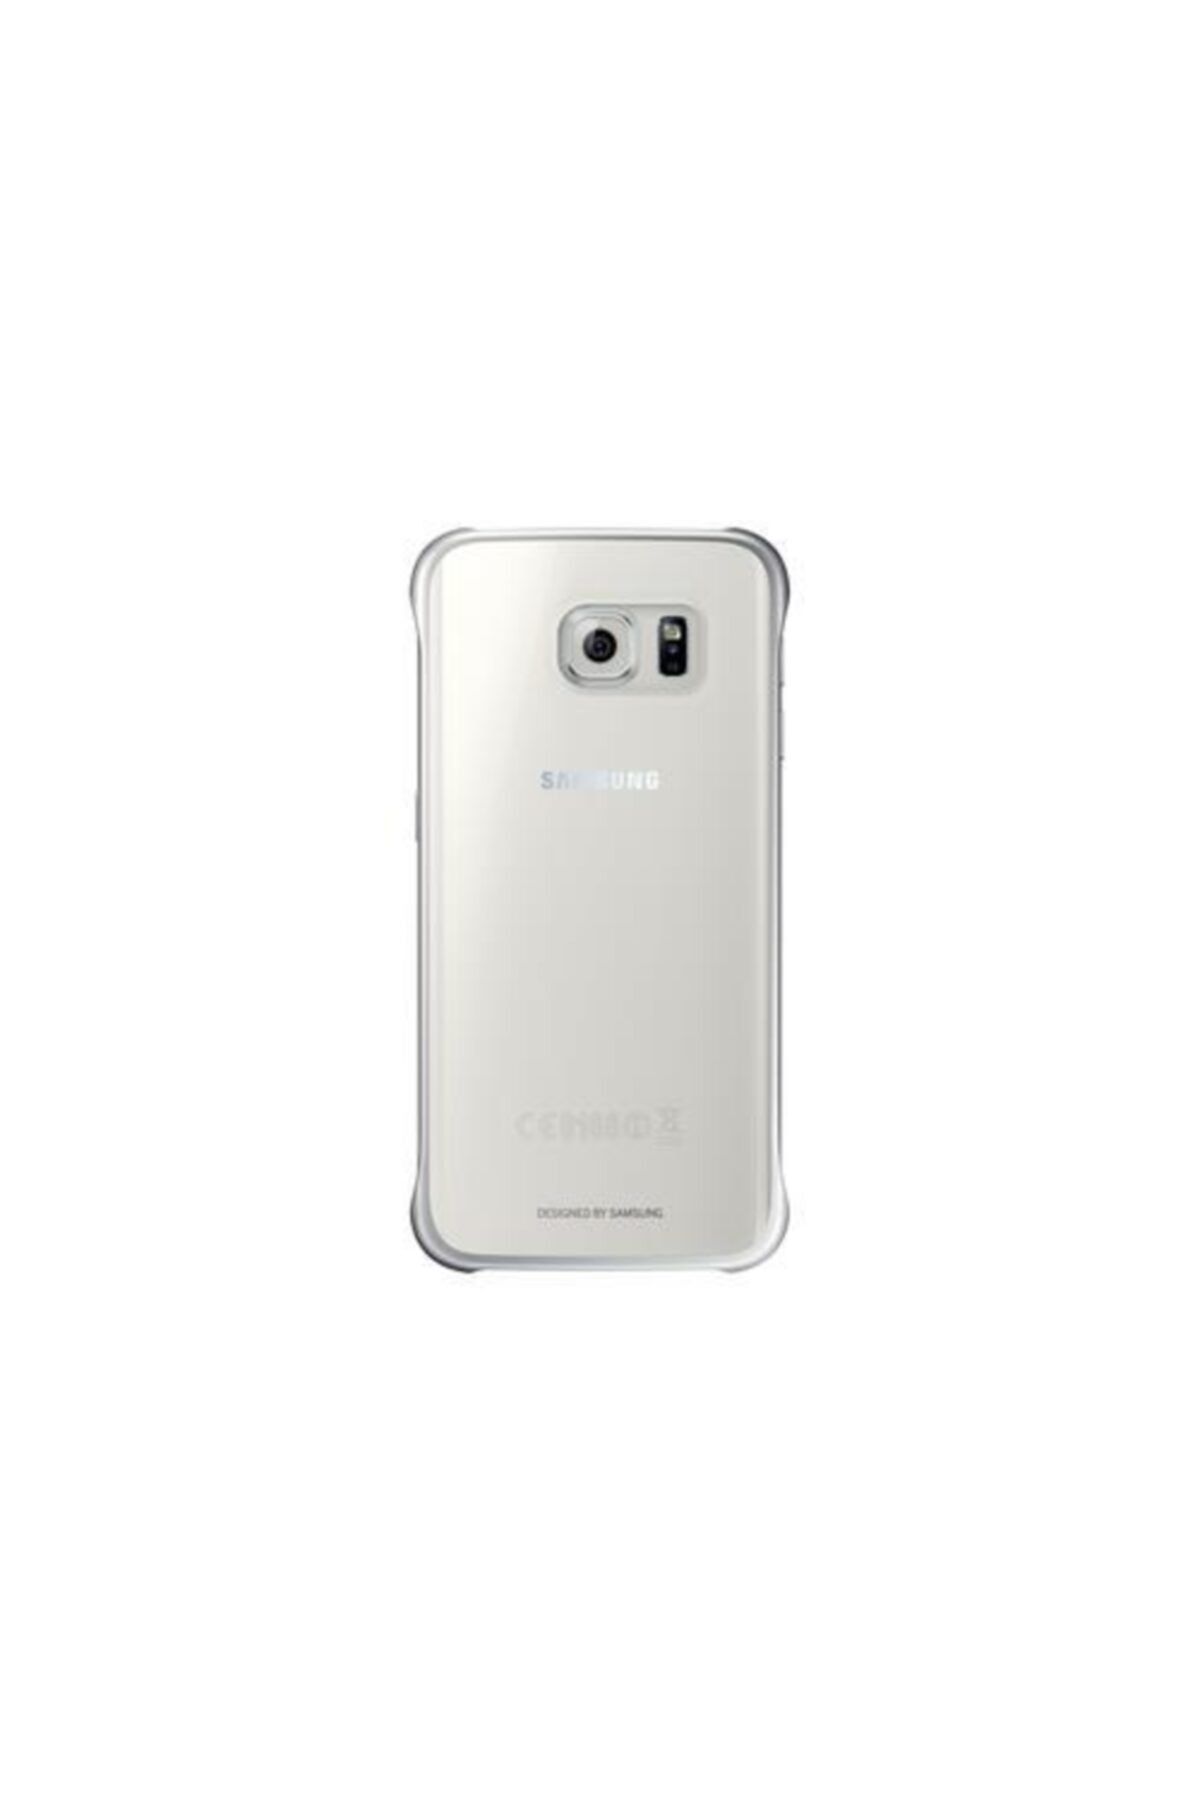 Samsung Galaxy S6 Edge Koruma Kılıfı Şeffaf Gümüş Ef-qg925bsegww